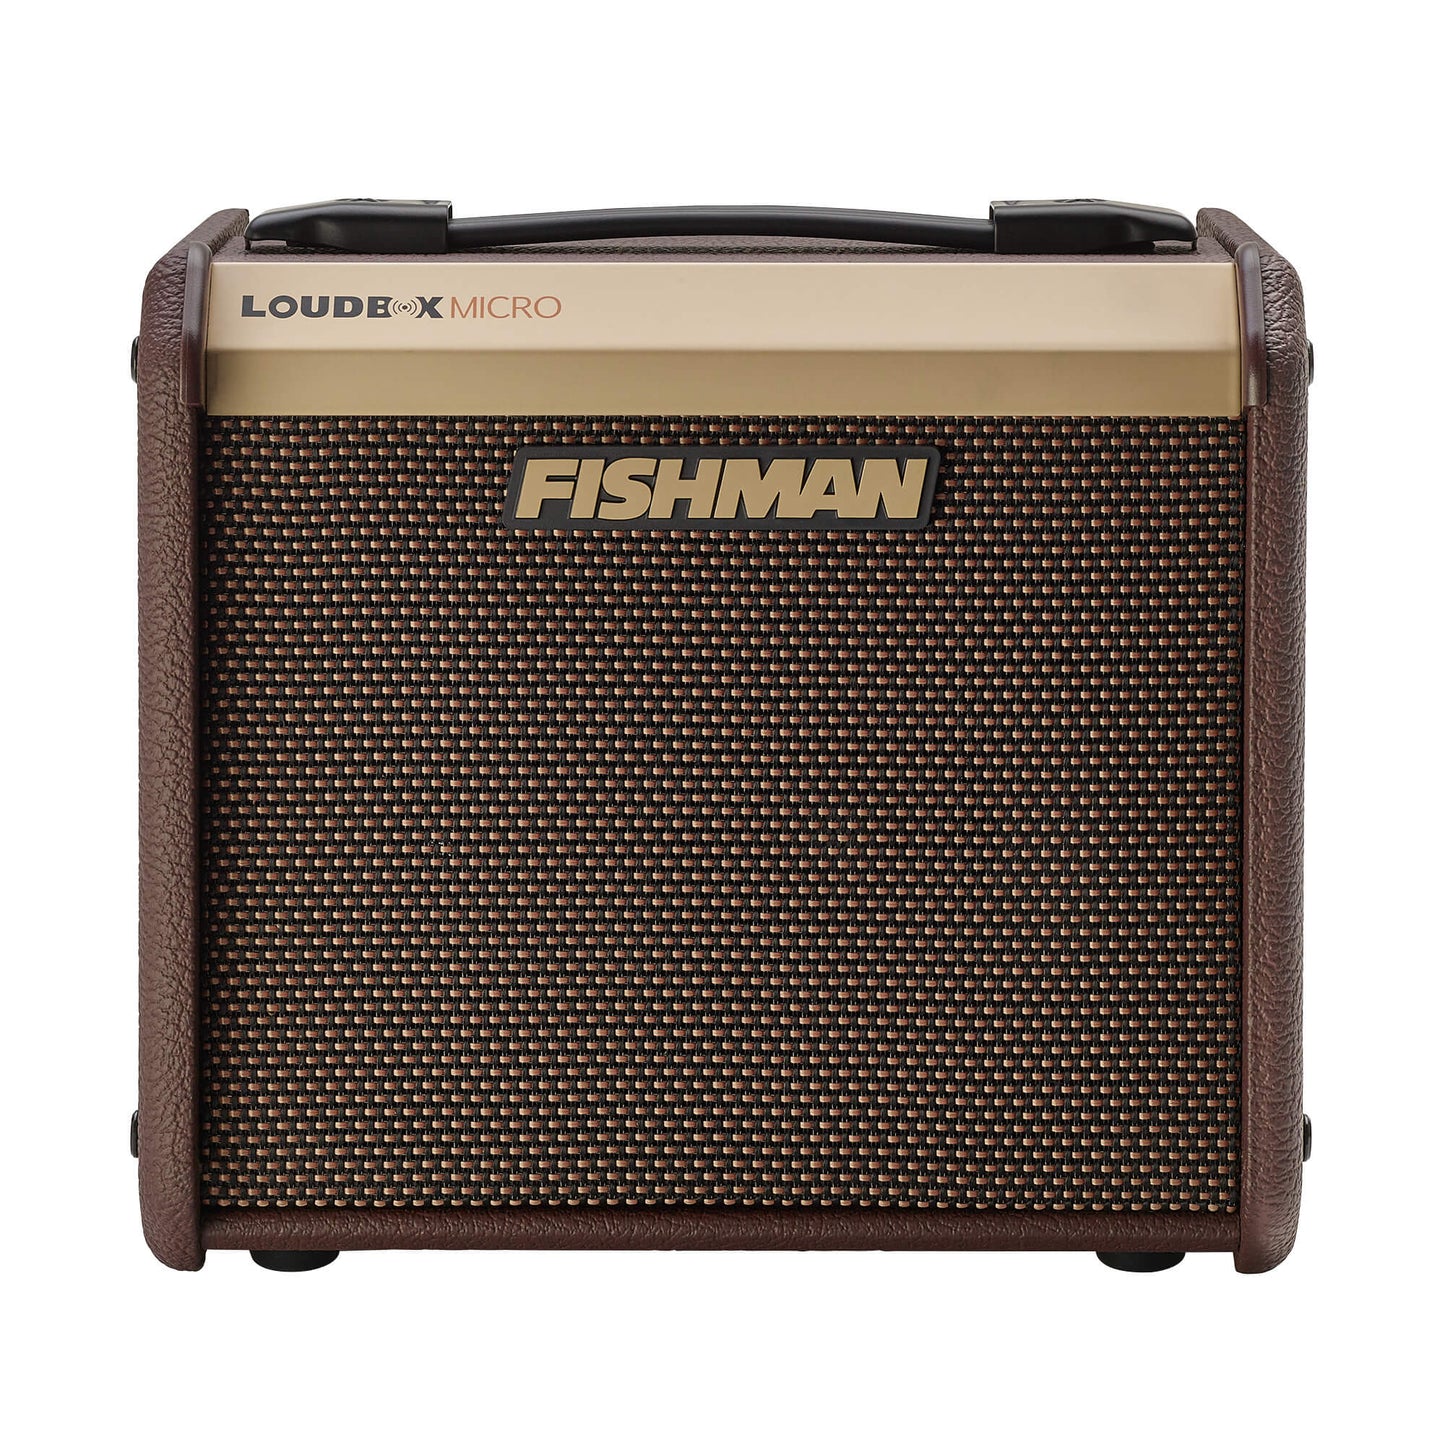 Fishman Loudbox Micro Acoustic Amp, Front